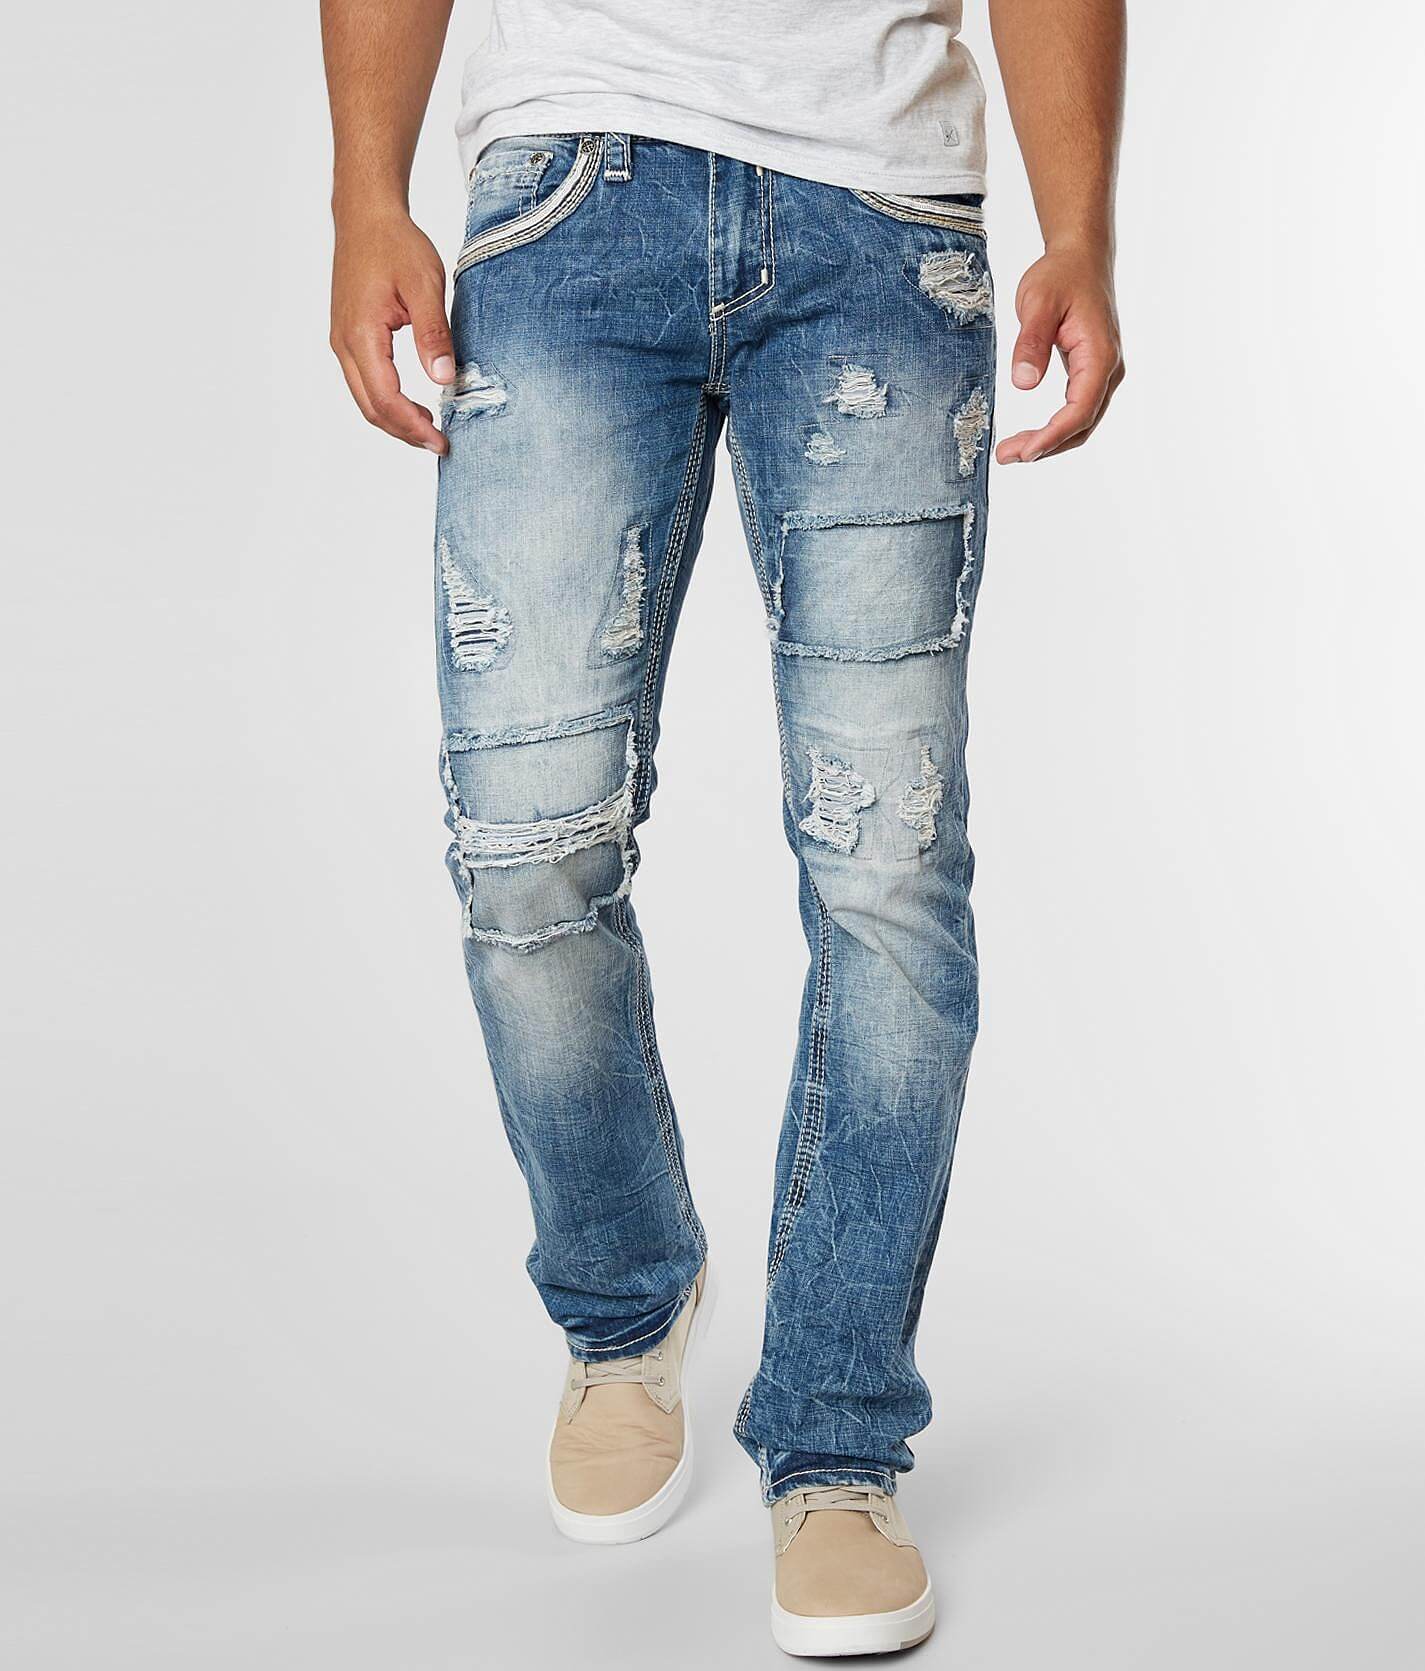 buckle jeans mens sale